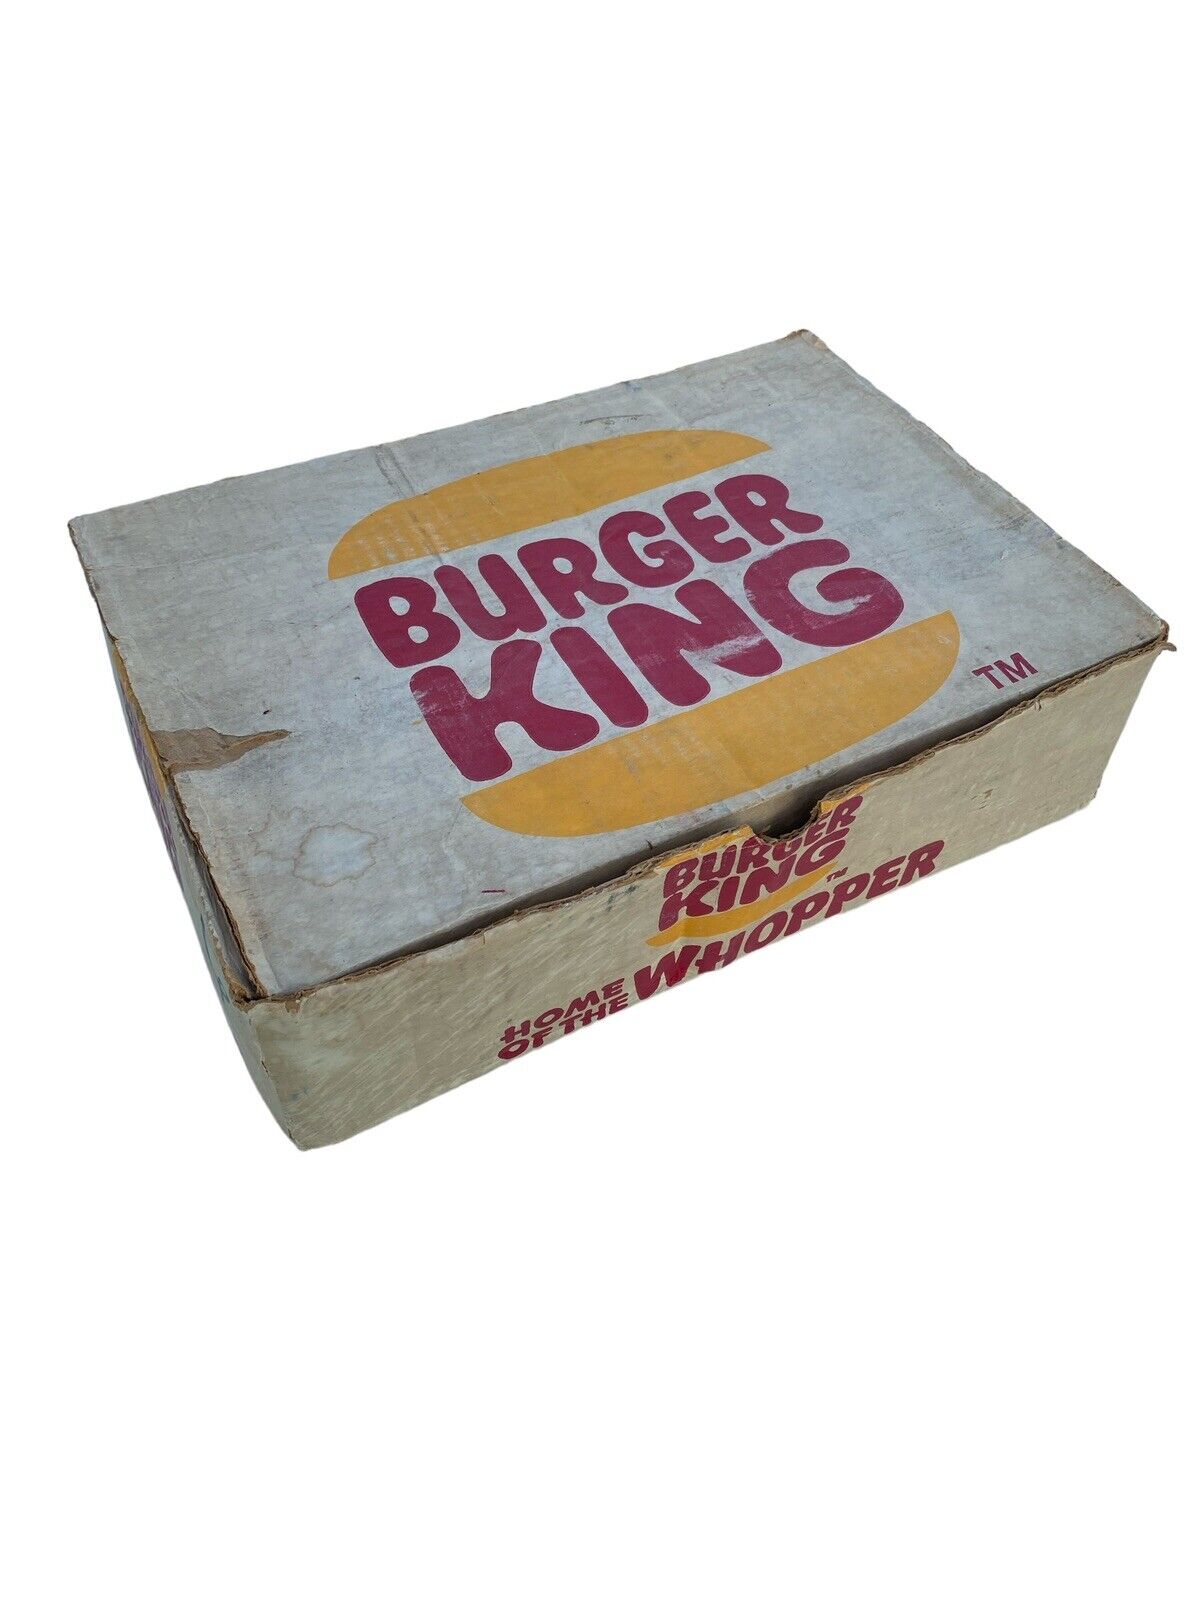 Vintage Burger King Whopper Frozen Patty Box Advertising Prop